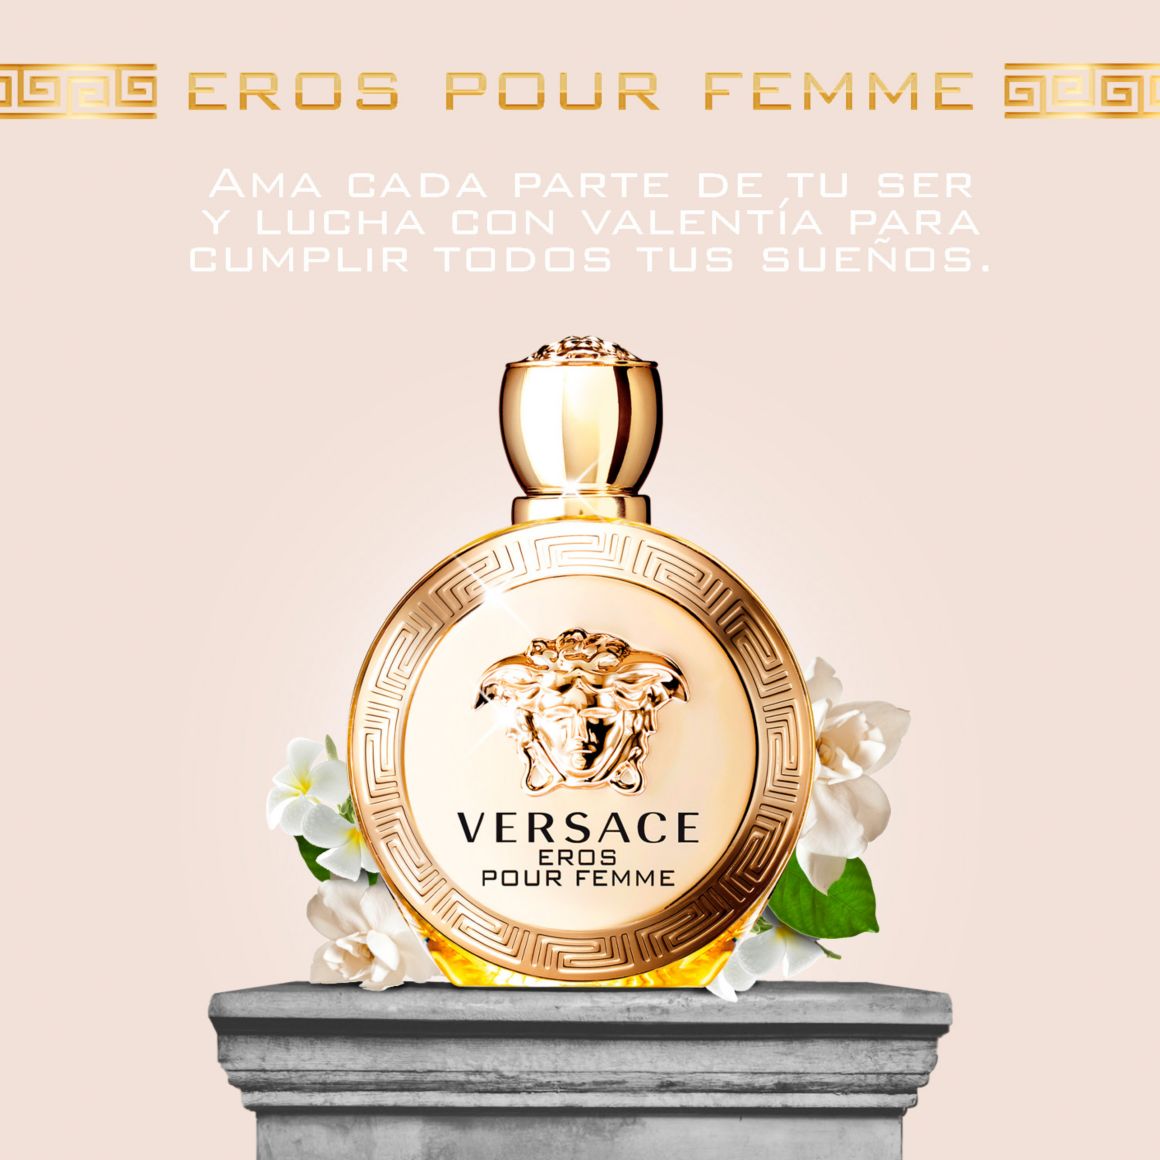 Perfume, Fragancia, Aroma, Versace, VERSACE, Fragancia Versace, Eros, EROS Pour Femme, Dorado, Fragancia Dorada, Grecia, Italia, Frase